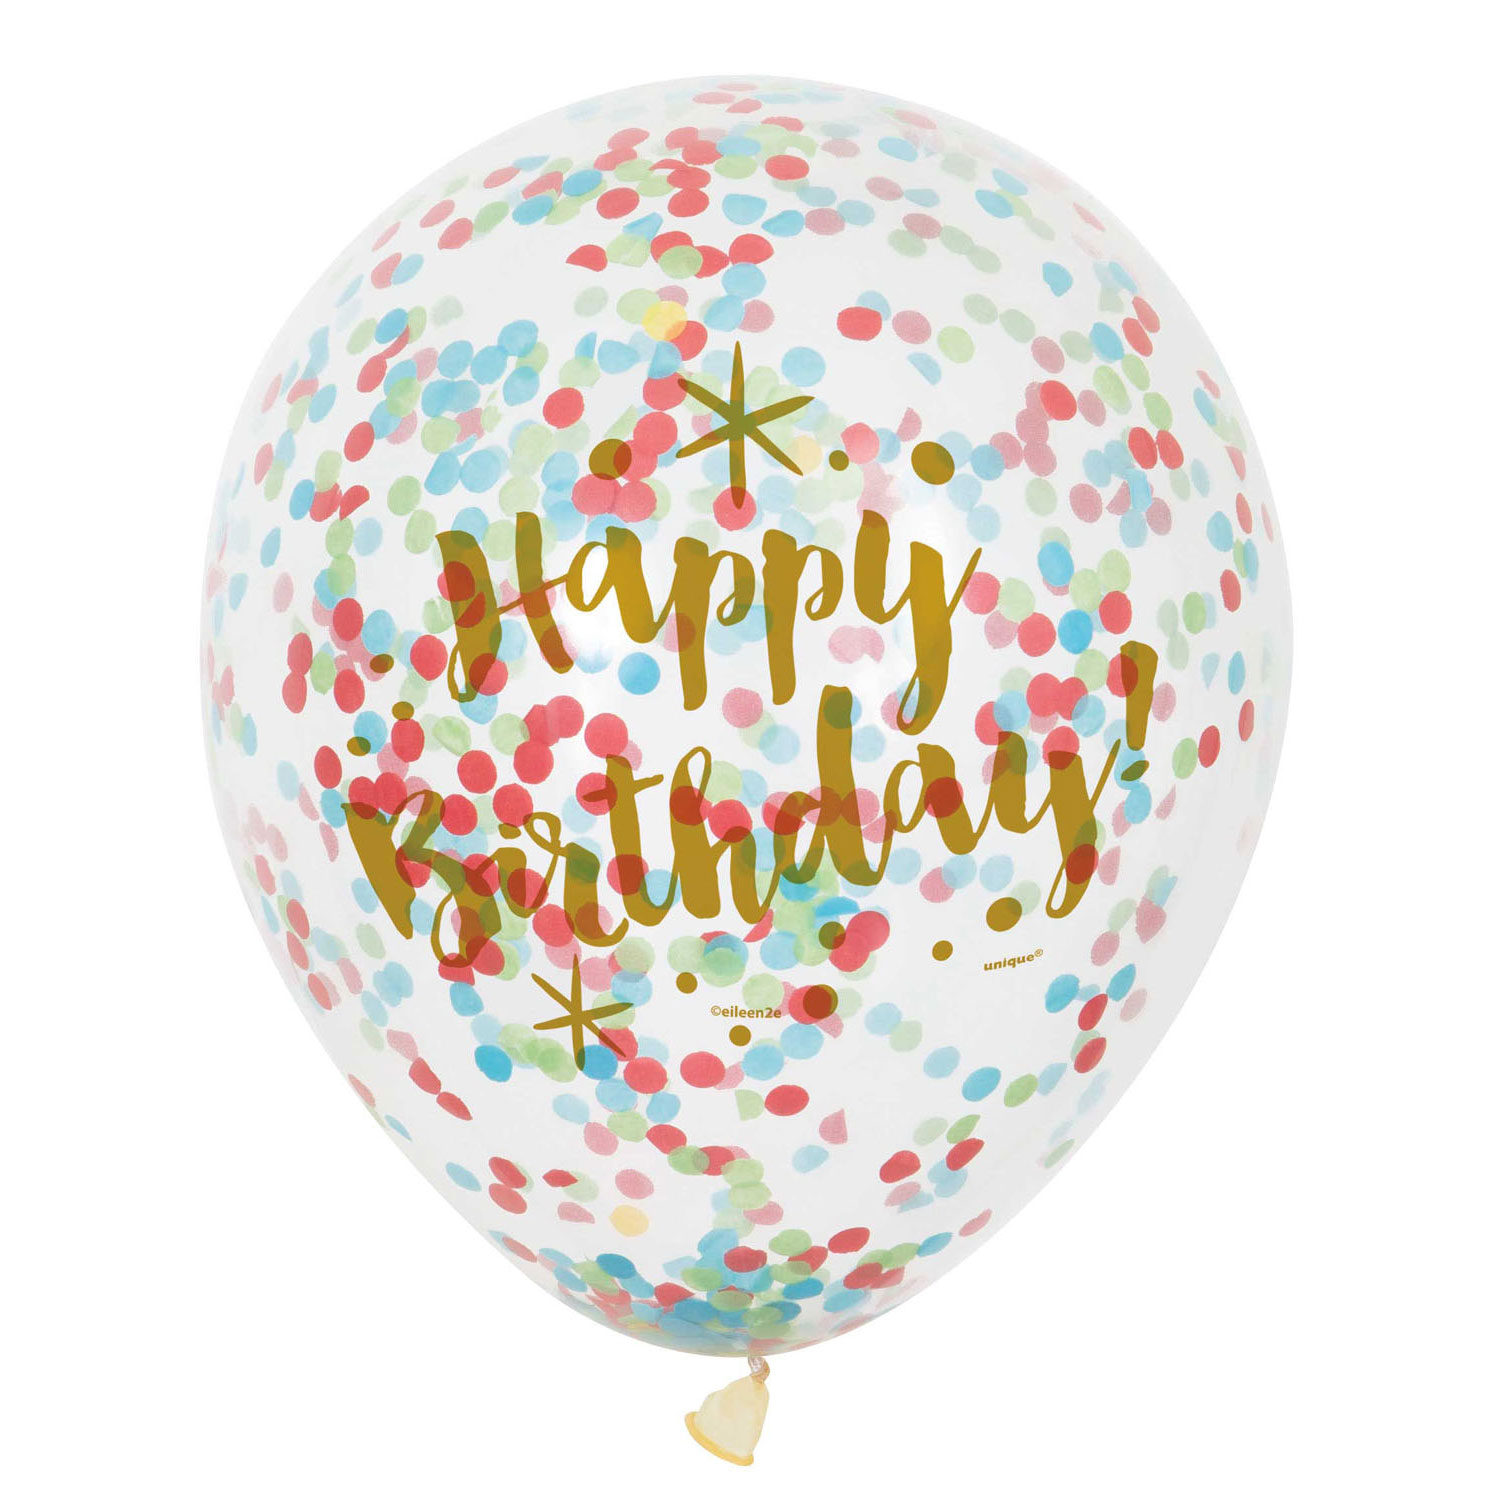 Confetti Ballonnen Happy Birthday